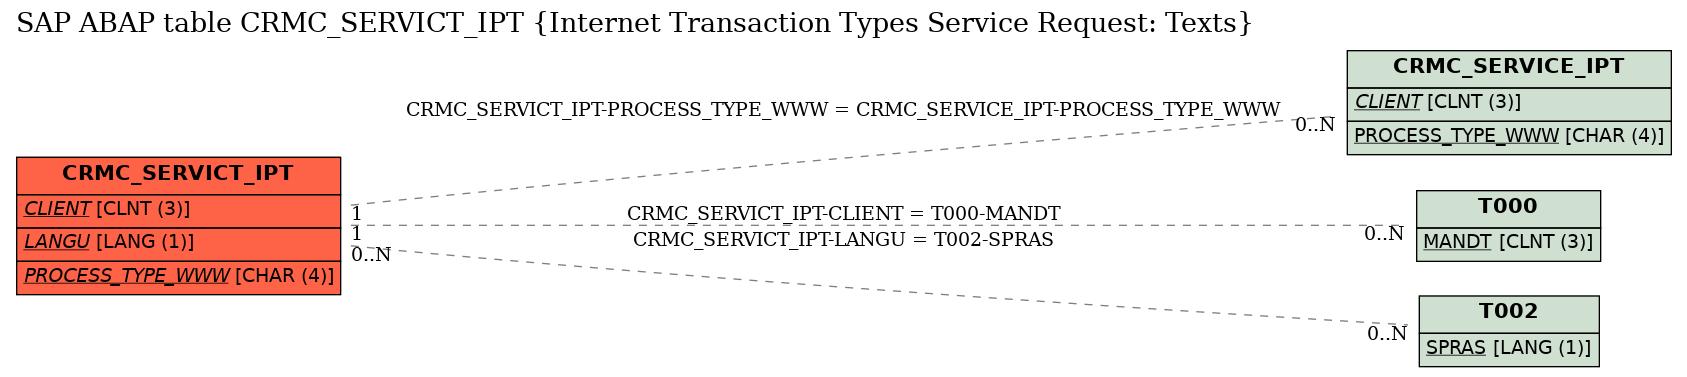 E-R Diagram for table CRMC_SERVICT_IPT (Internet Transaction Types Service Request: Texts)